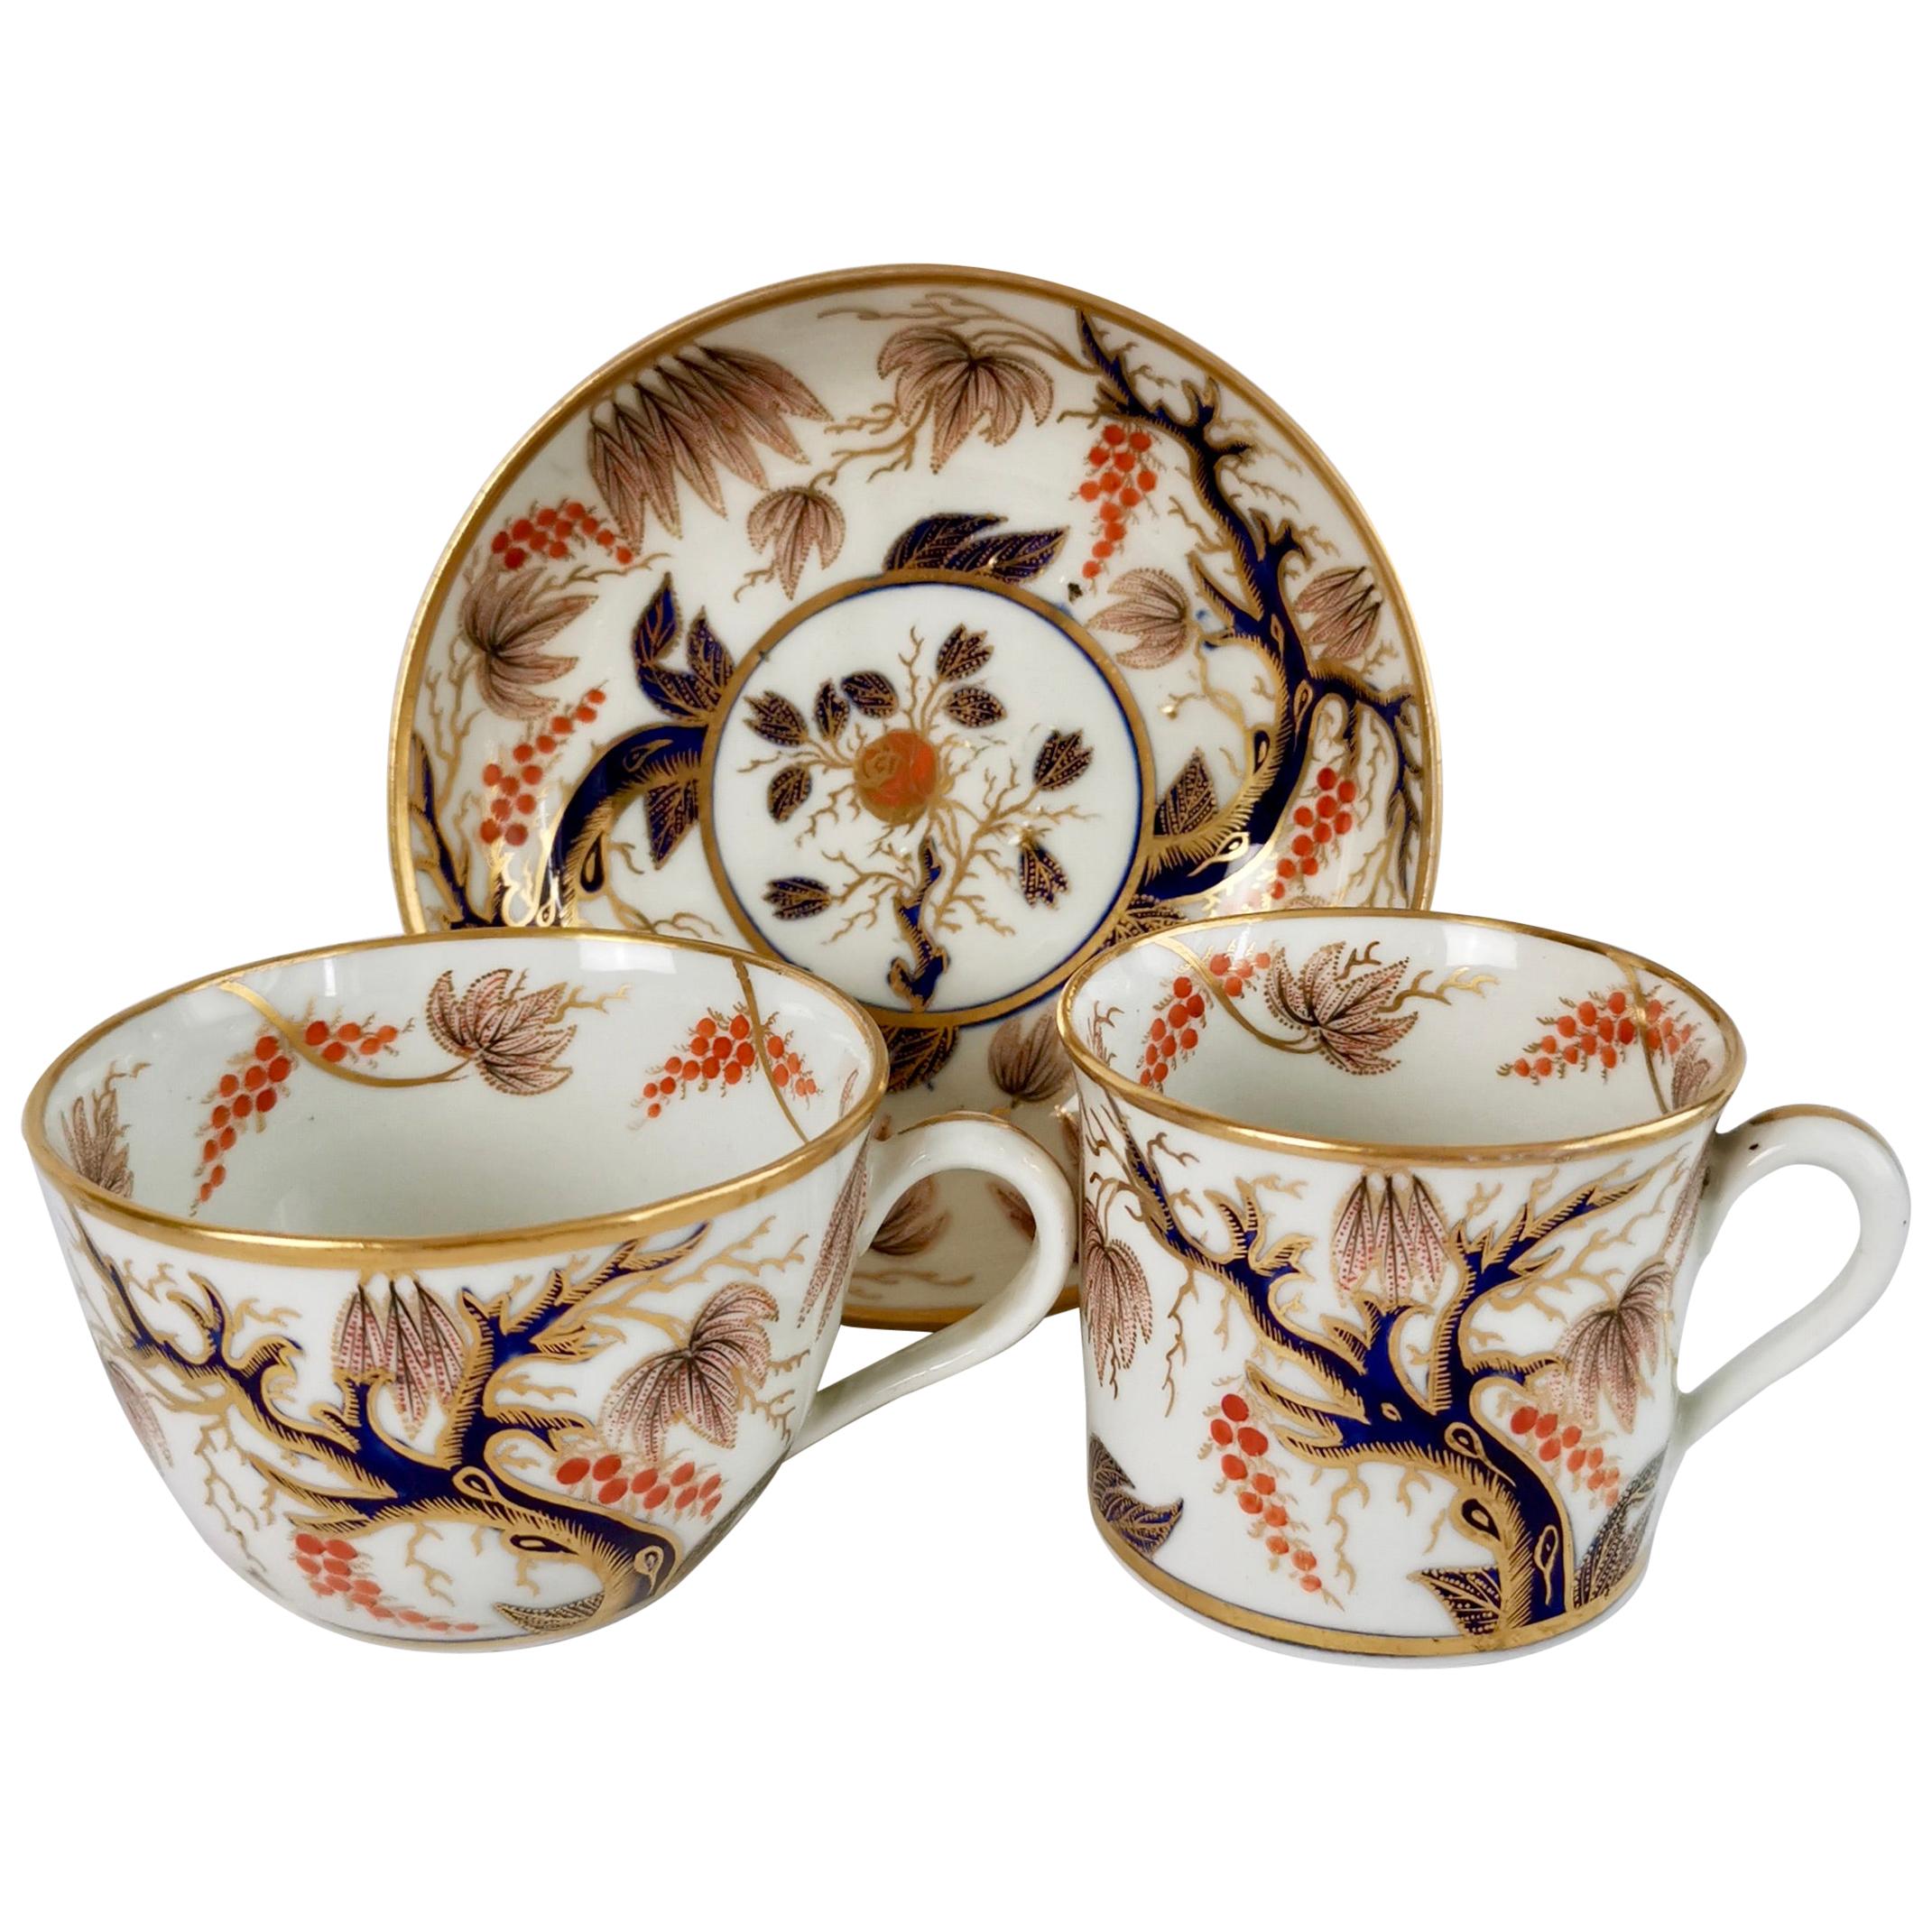 New Hall Porcelain True Trio, Imari Vine Patt, 446, Regency, circa 1810